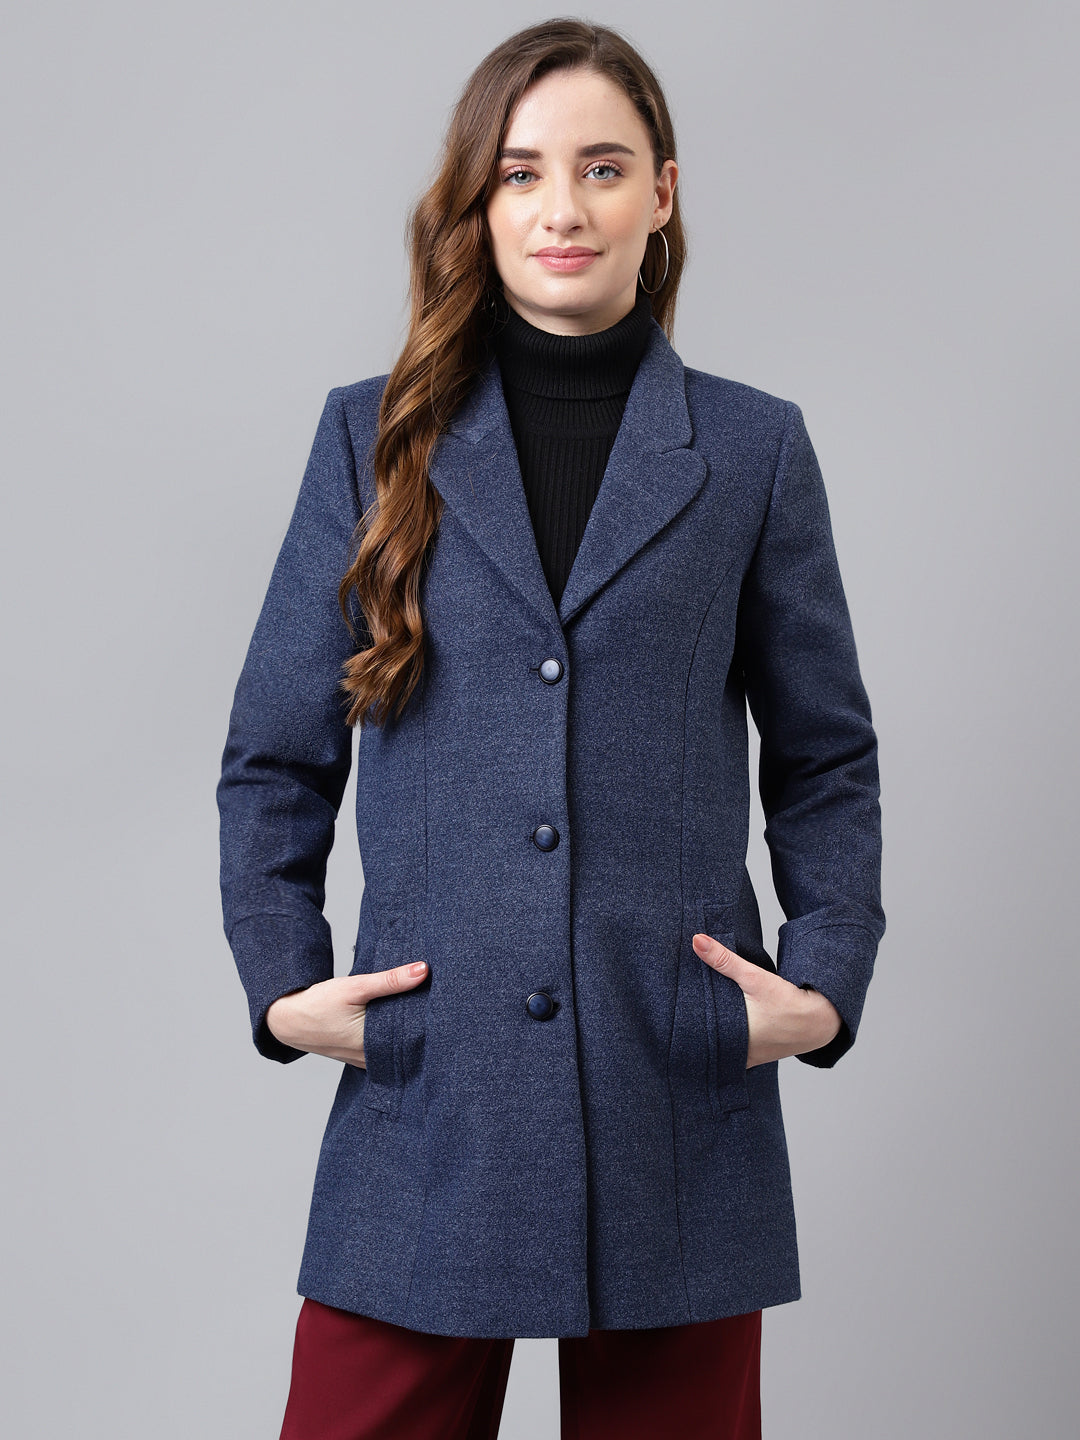 Blue Full Sleeve Solid Normal Over Coat Jacket